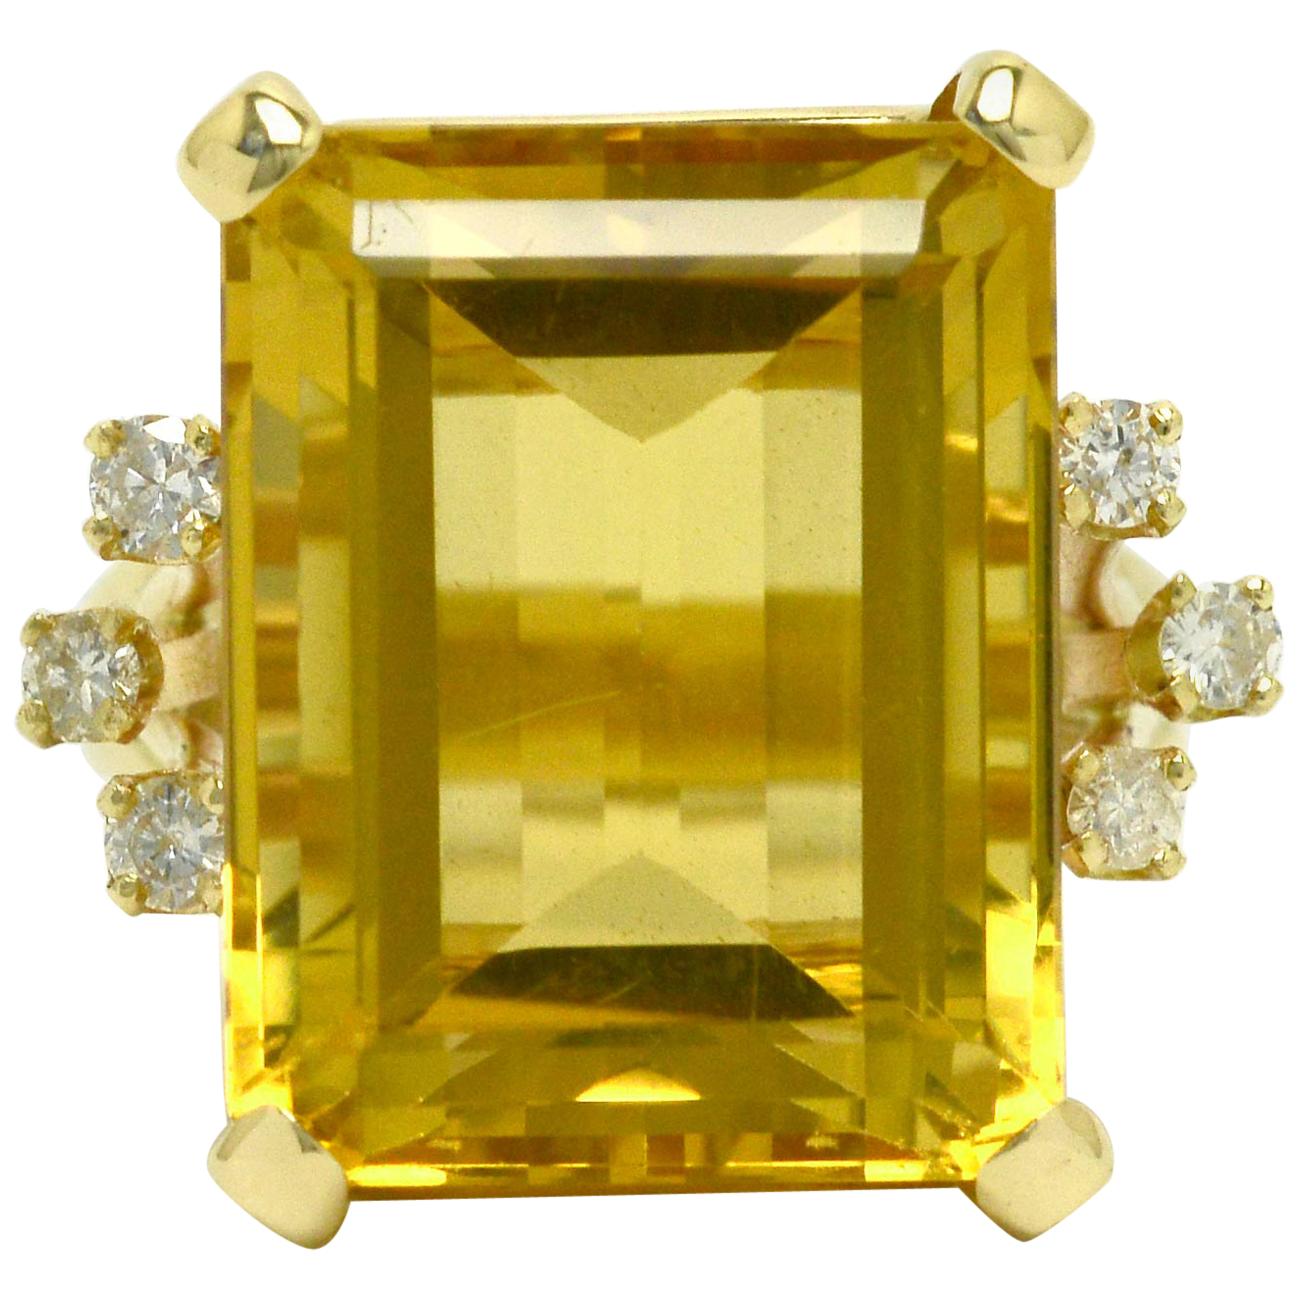 1940s Retro Emerald Cut Citrine Cocktail Ring 19 Carat Gemstone 14K Gold Diamond